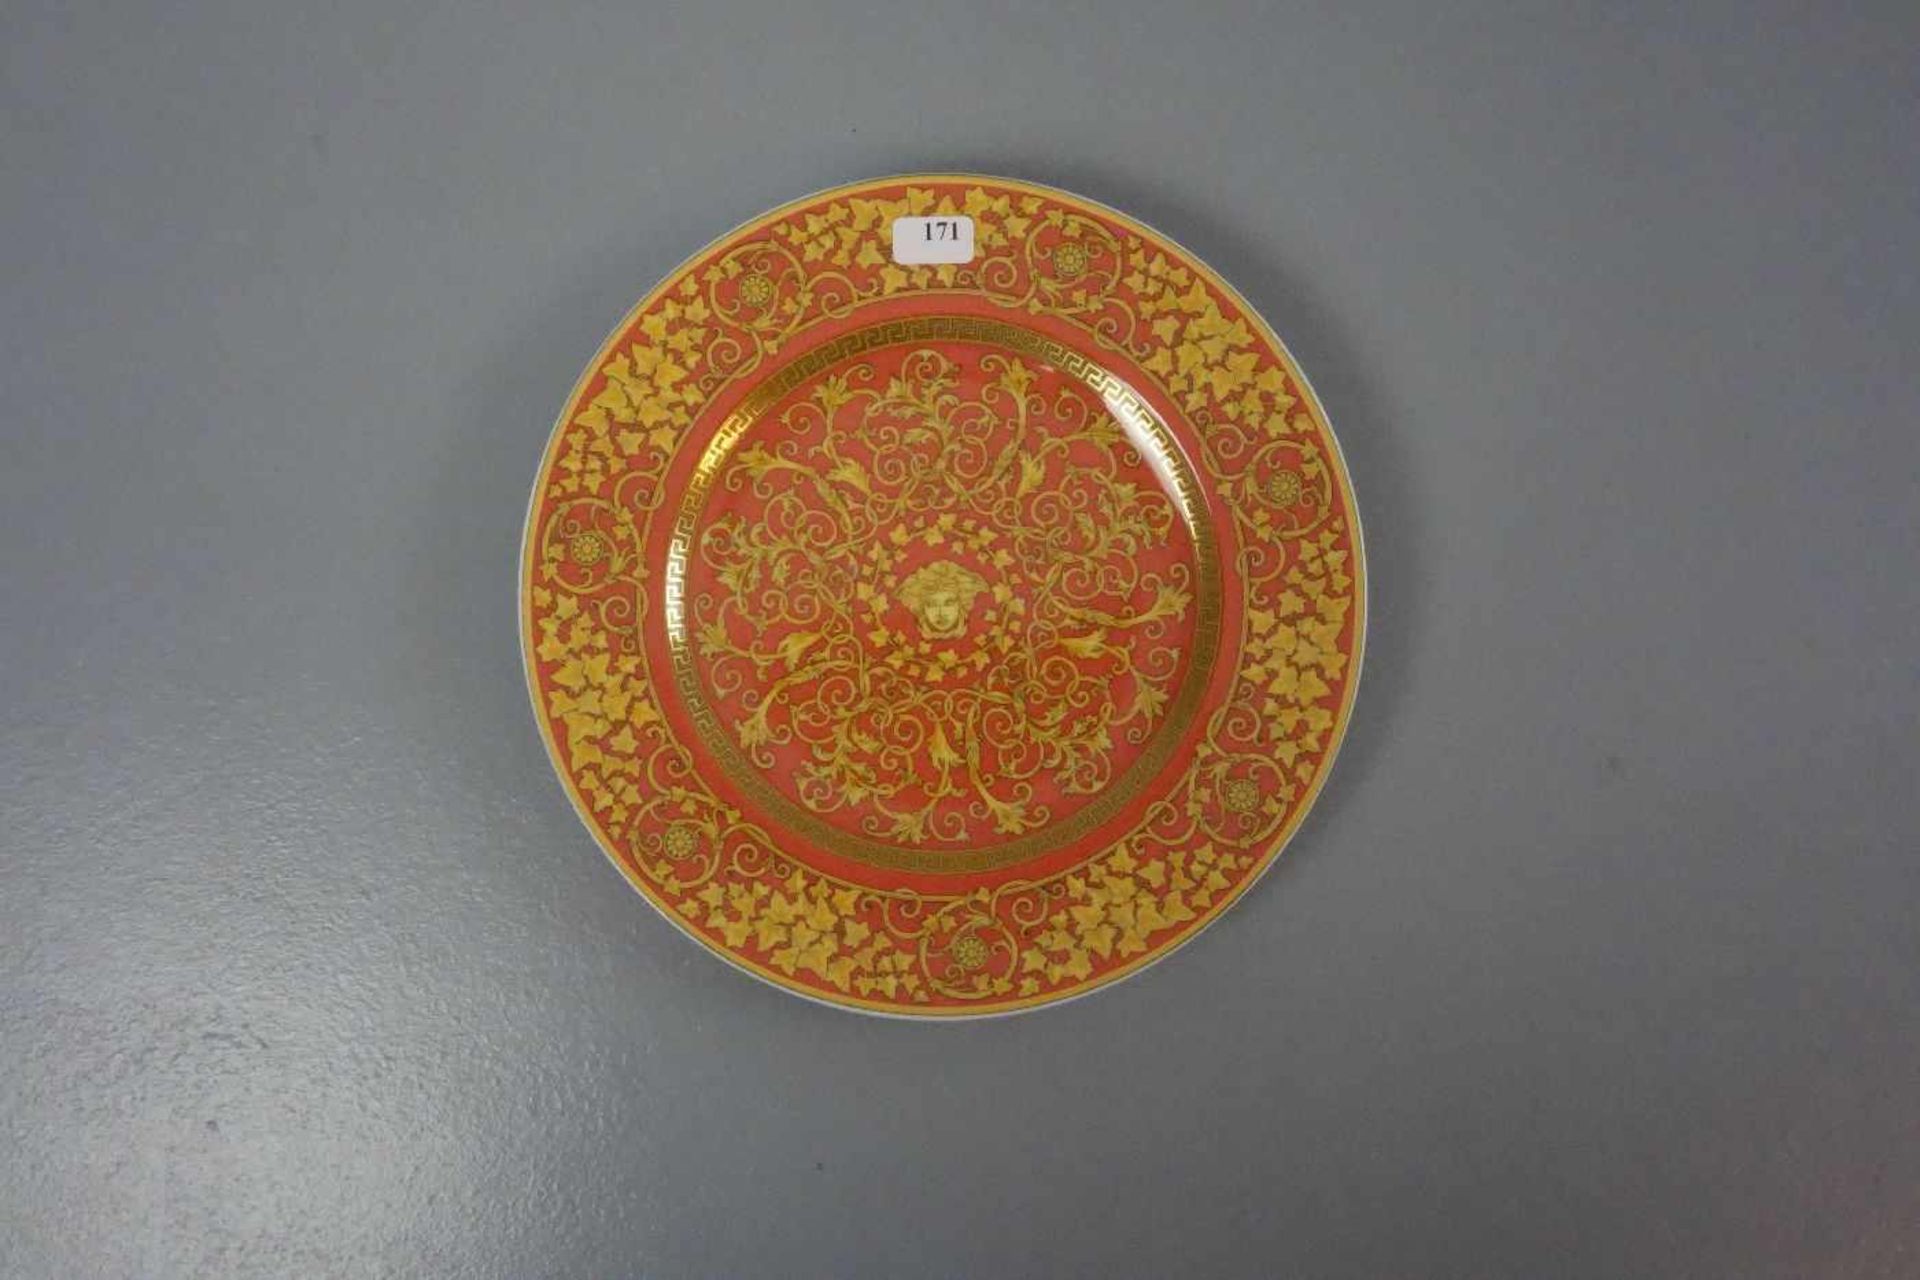 VERSACE - TELLER / plate, Porzellan, Manufaktur Rosenthal, Dekor "Floralia Medusa Red" mit